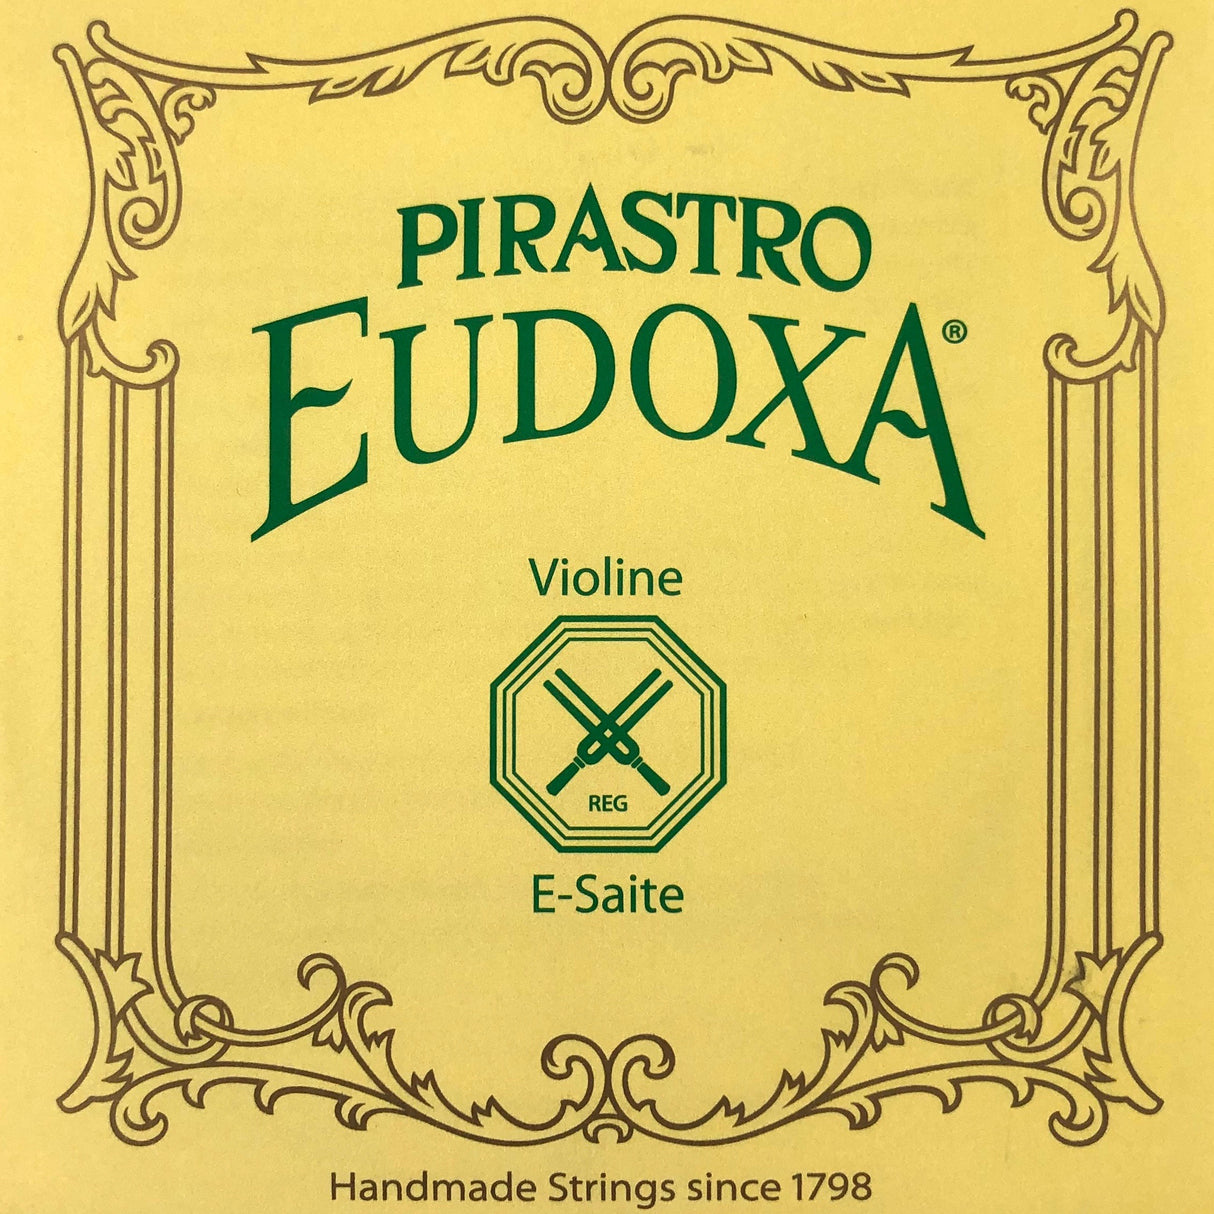 Pirastro Eudoxa Violin Einzelsaite E mit Kugel 4/4 - Musik-Ebert Gmbh